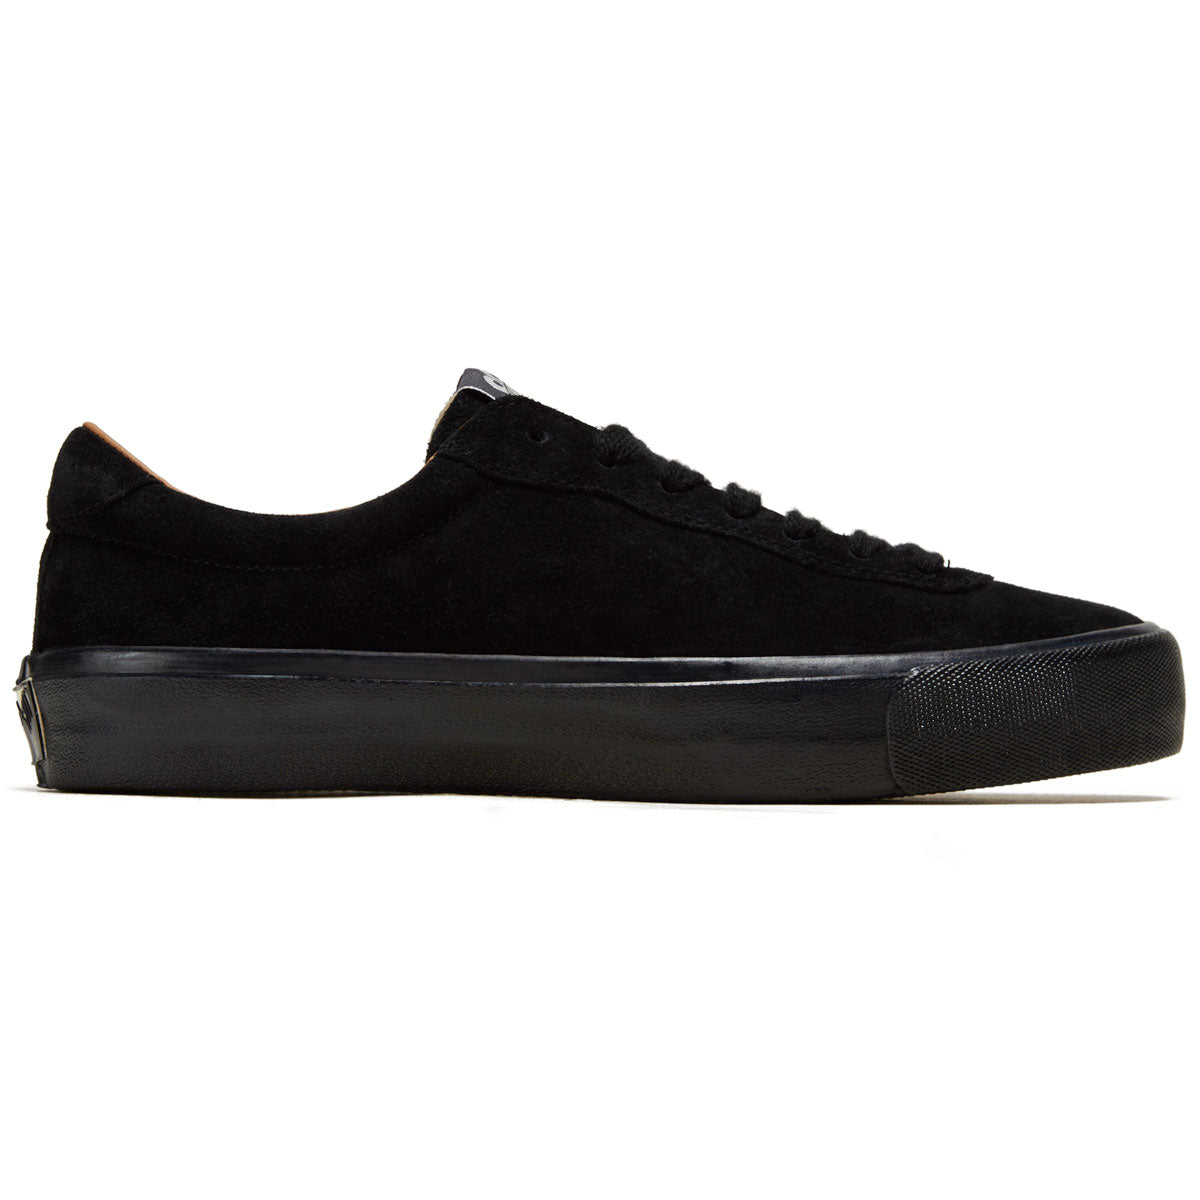 Last Resort AB VM001 Suede Lo Shoes - 3 x Black/Black image 1